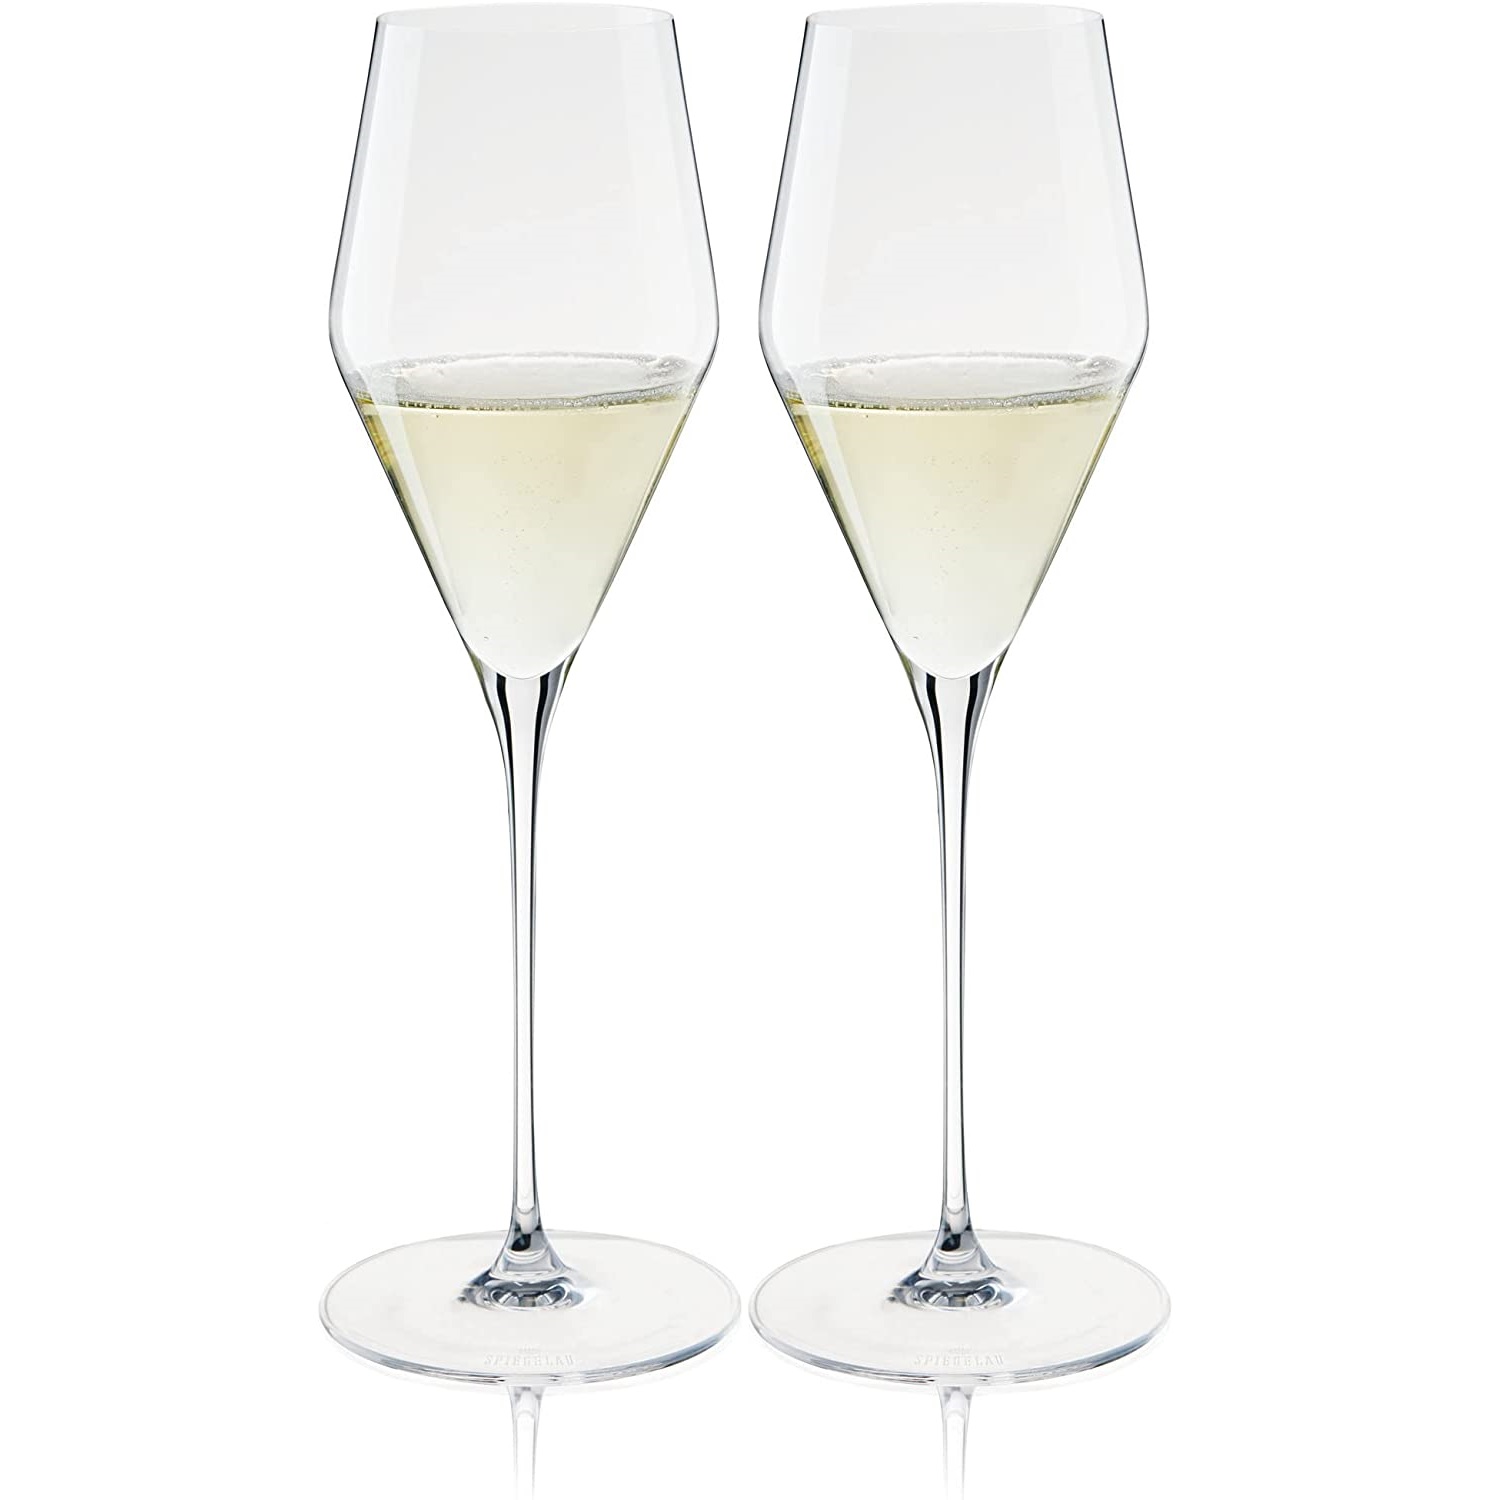 2 бокала для шампанского Spiegelau Definition Champagne 250 мл (арт. 1350169)